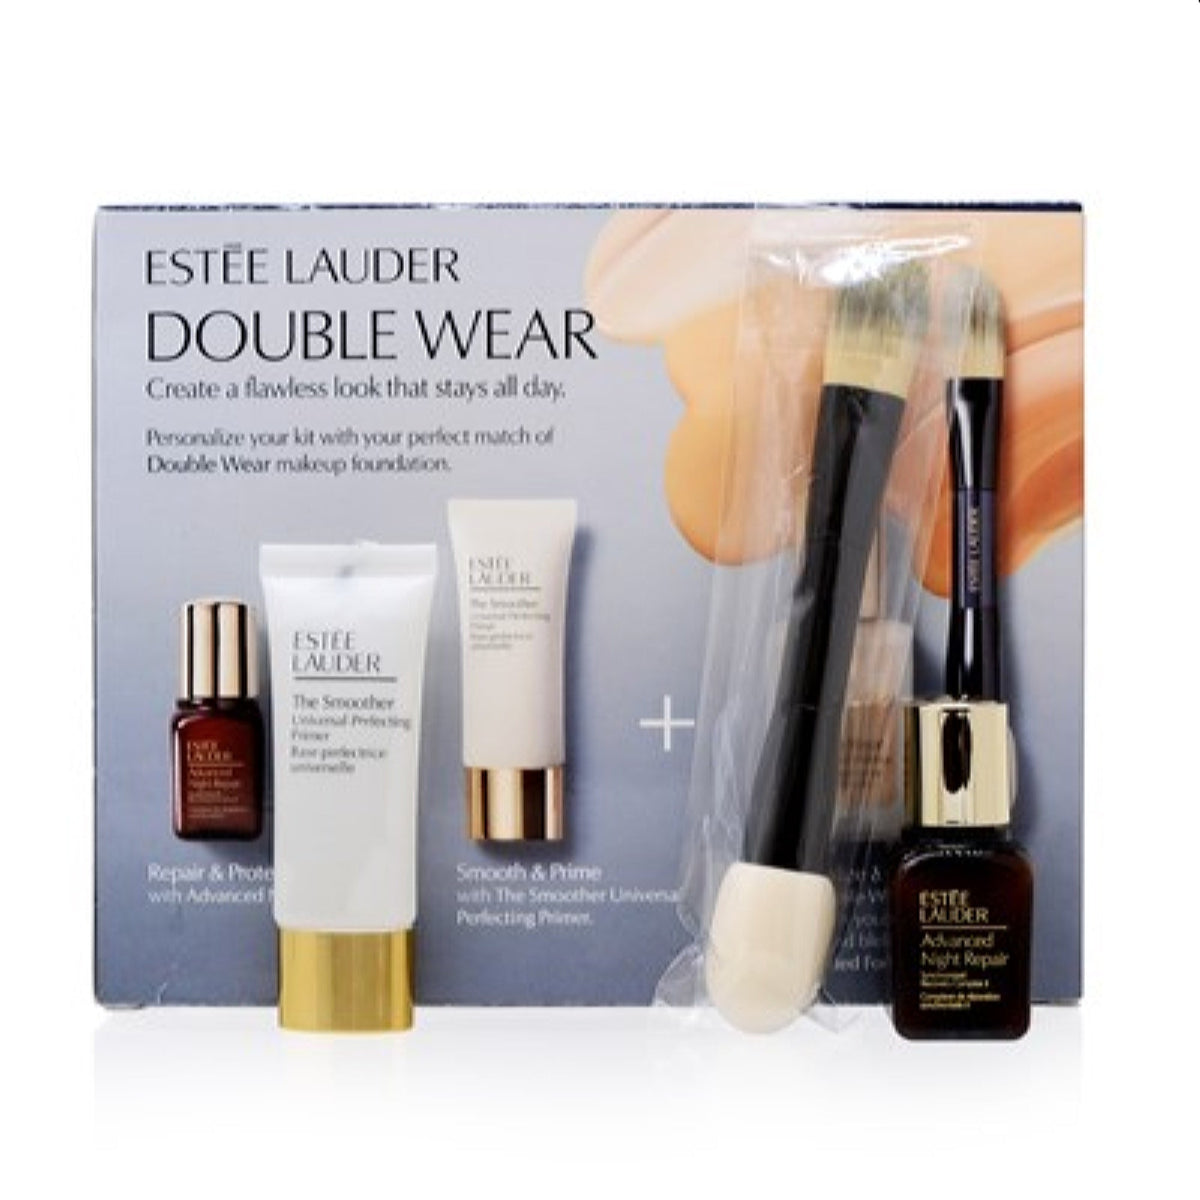 Estee Lauder Meet Your Match Double Wear Makeup Kit  